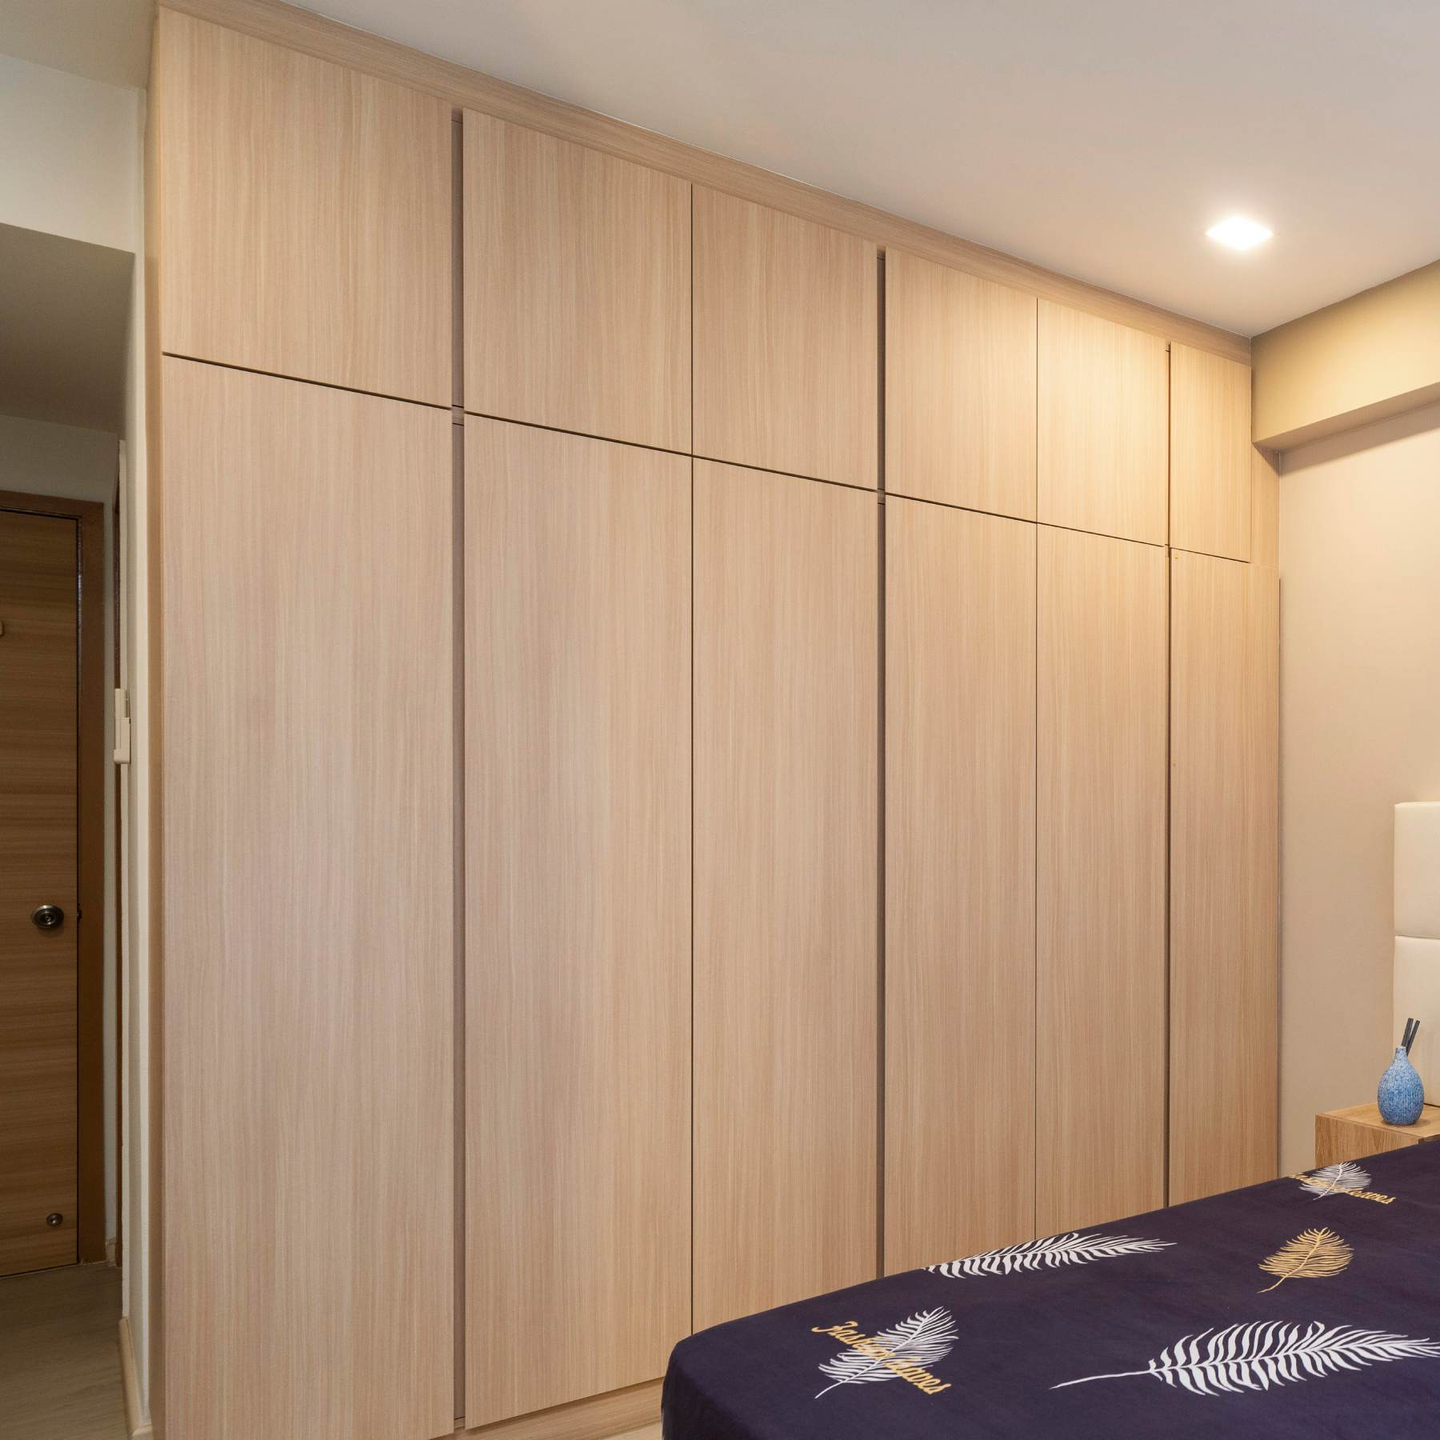 Light Wooden Laminate Design For Wardrobe And Loft - Livspace